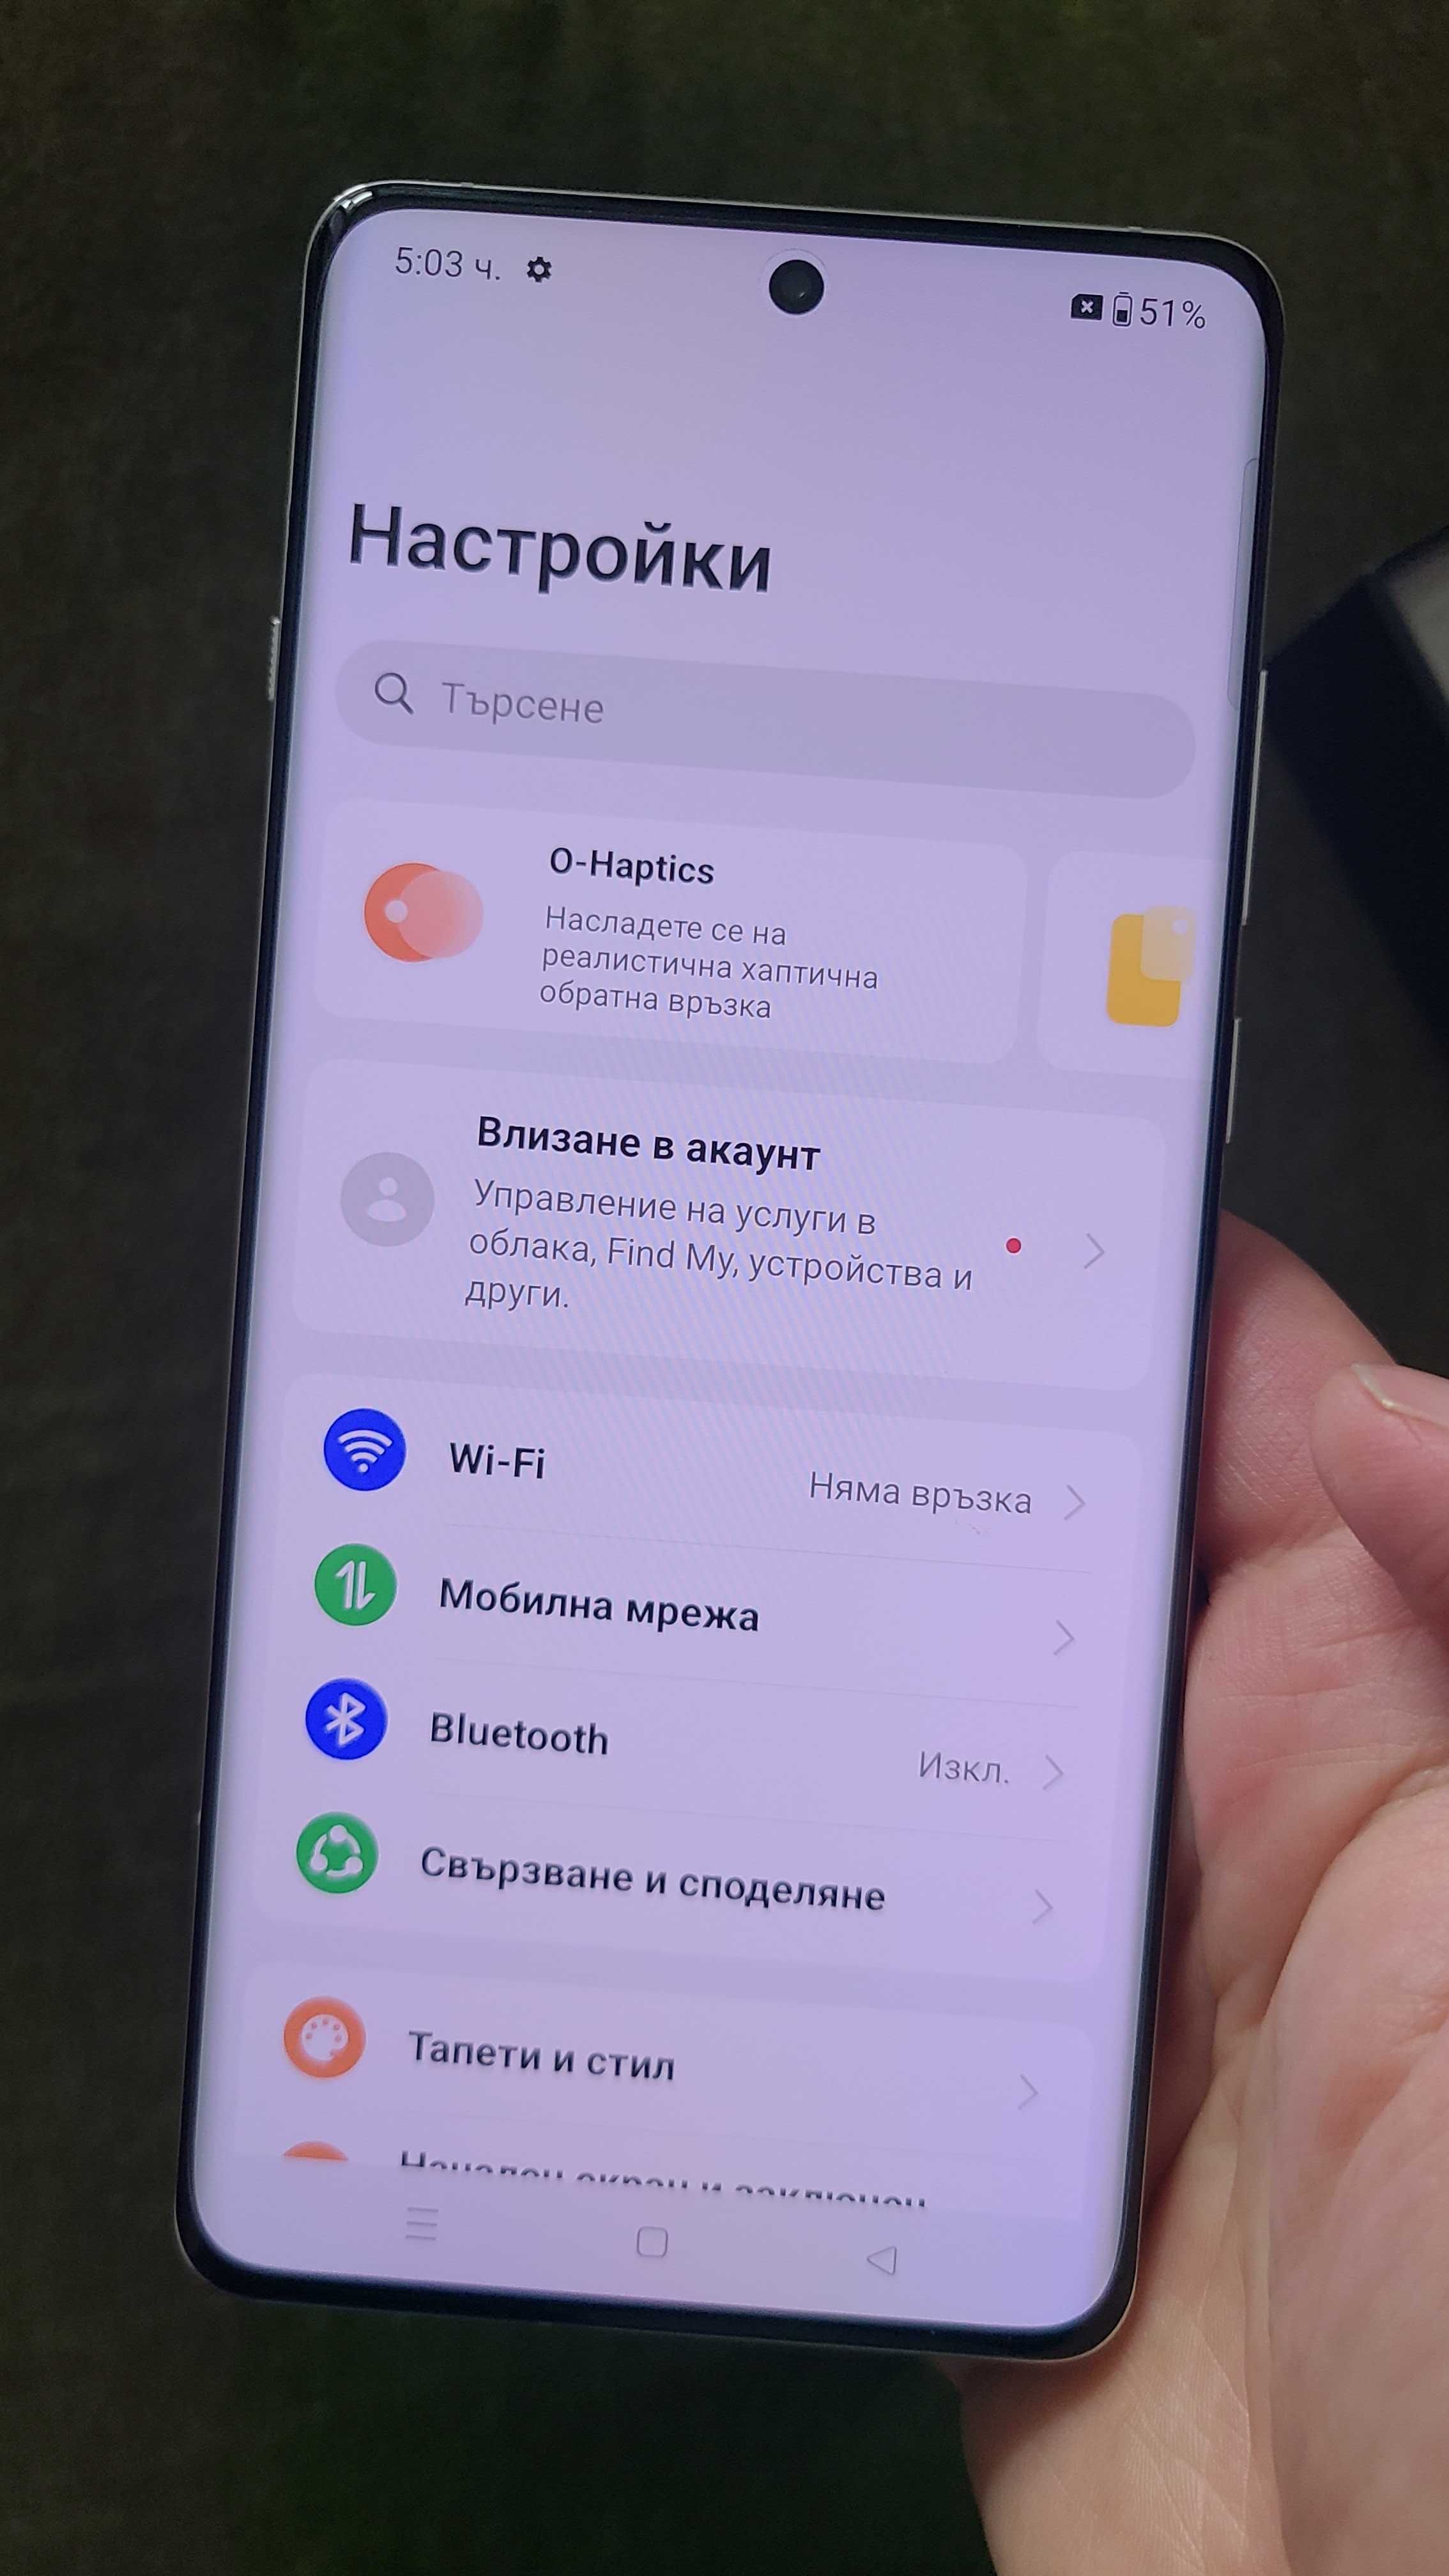 OnePlus 12 Dual sim 5G Oxygen OS, EU ром с български